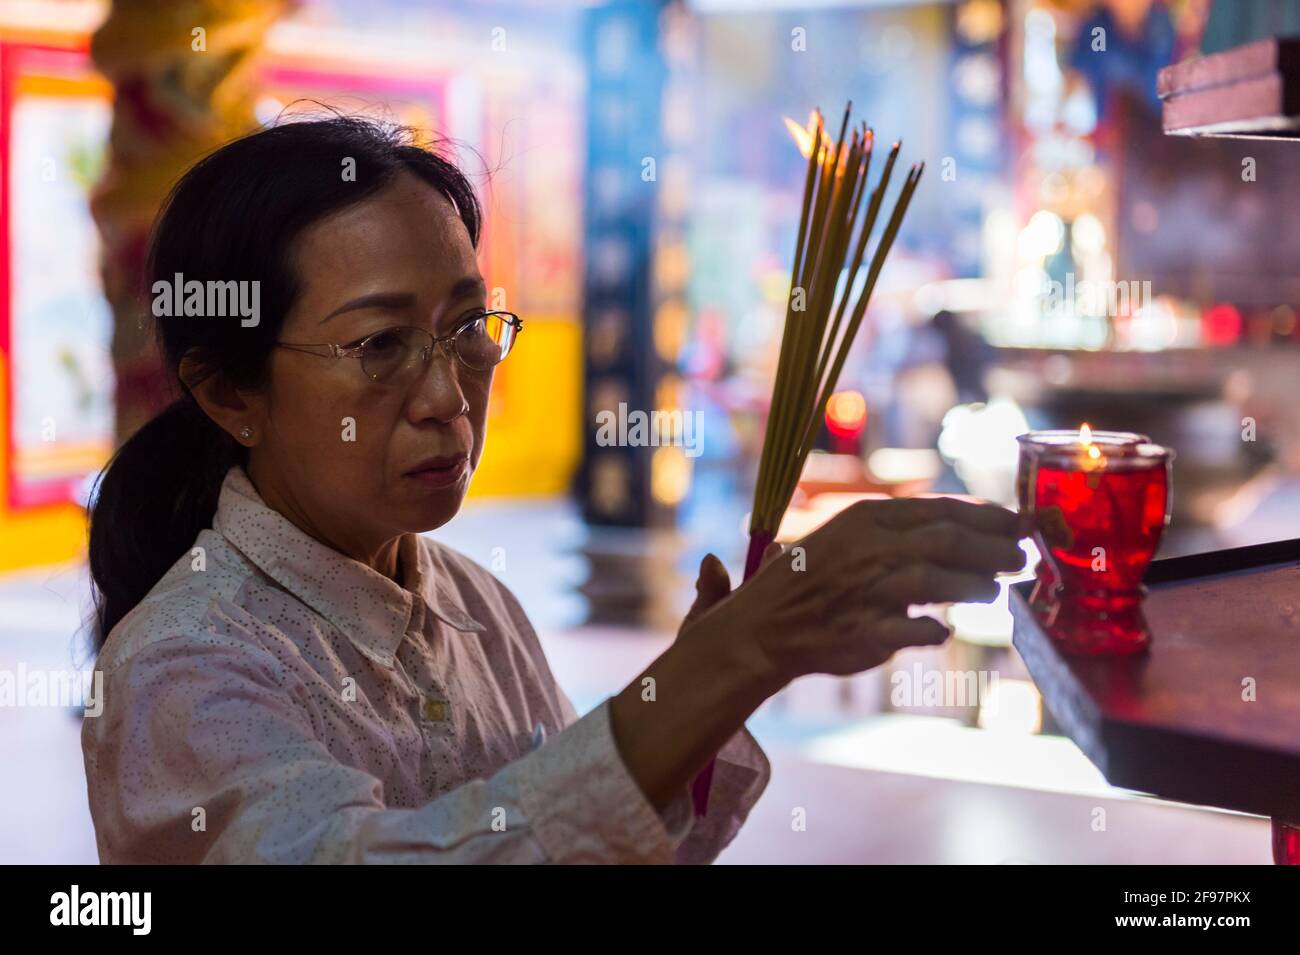 Vietnam, Ho Chi Minh City, the Chinese quarter Cholon with the Thien Hau Pagoda, elderly woman, incense sticks, Stock Photo